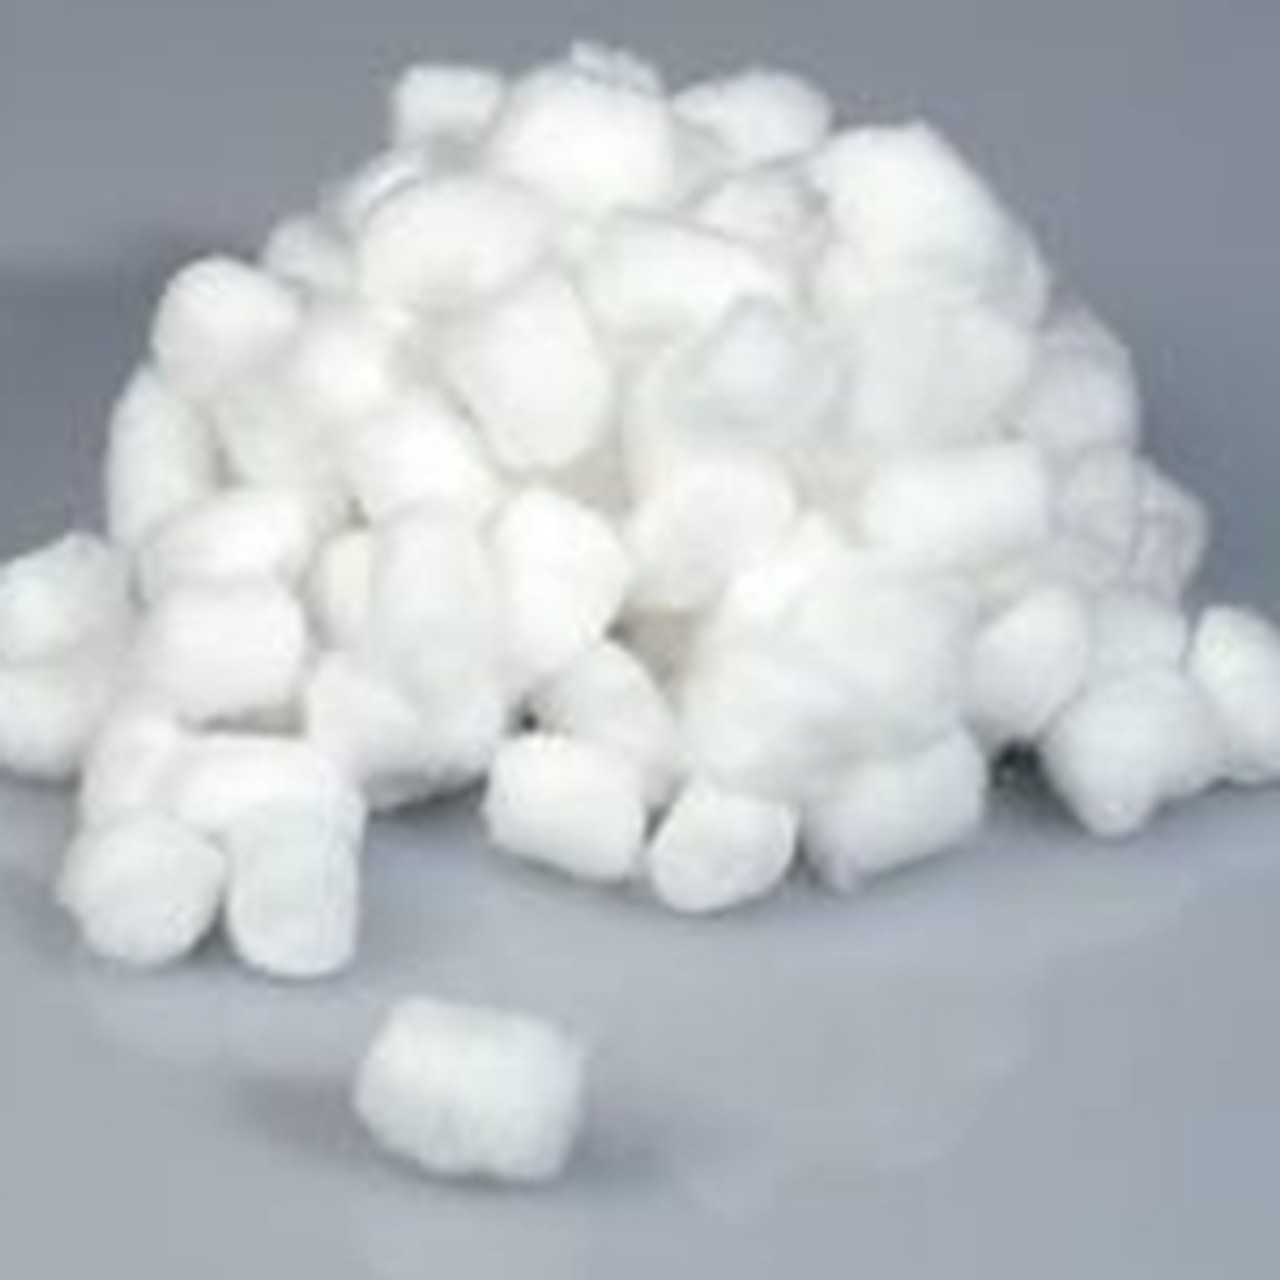 Intrinsics Medium Cotton Balls - Bulk 1,500 Count